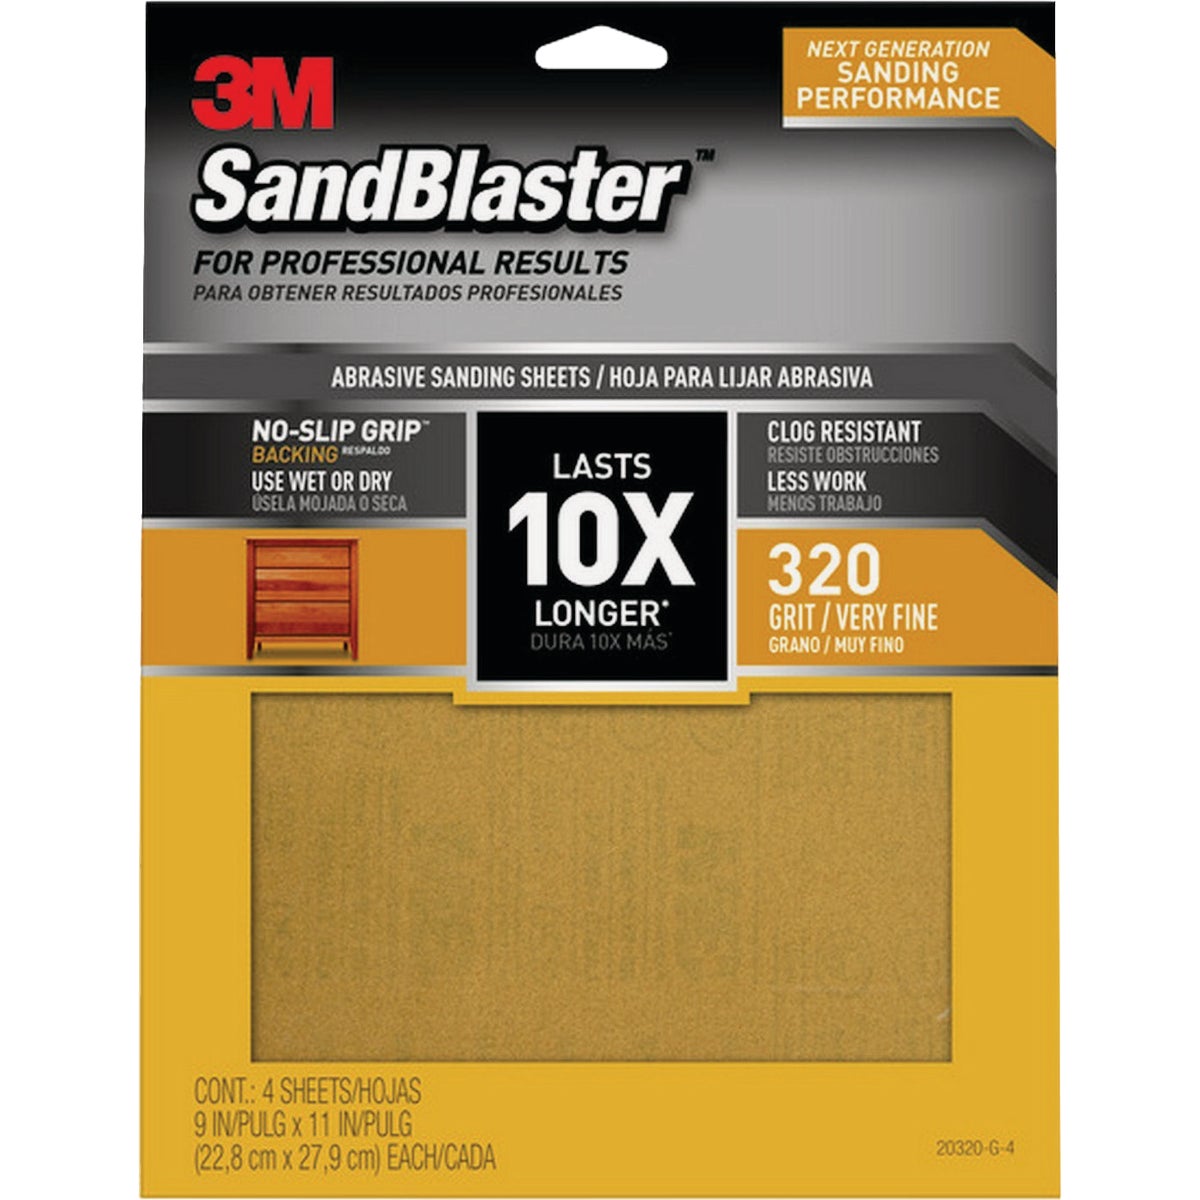 3M SandBlaster No Slip Grip Backing 9 In. x 11 In. 320 Grit Very Fine Sandpaper (4-Pack)